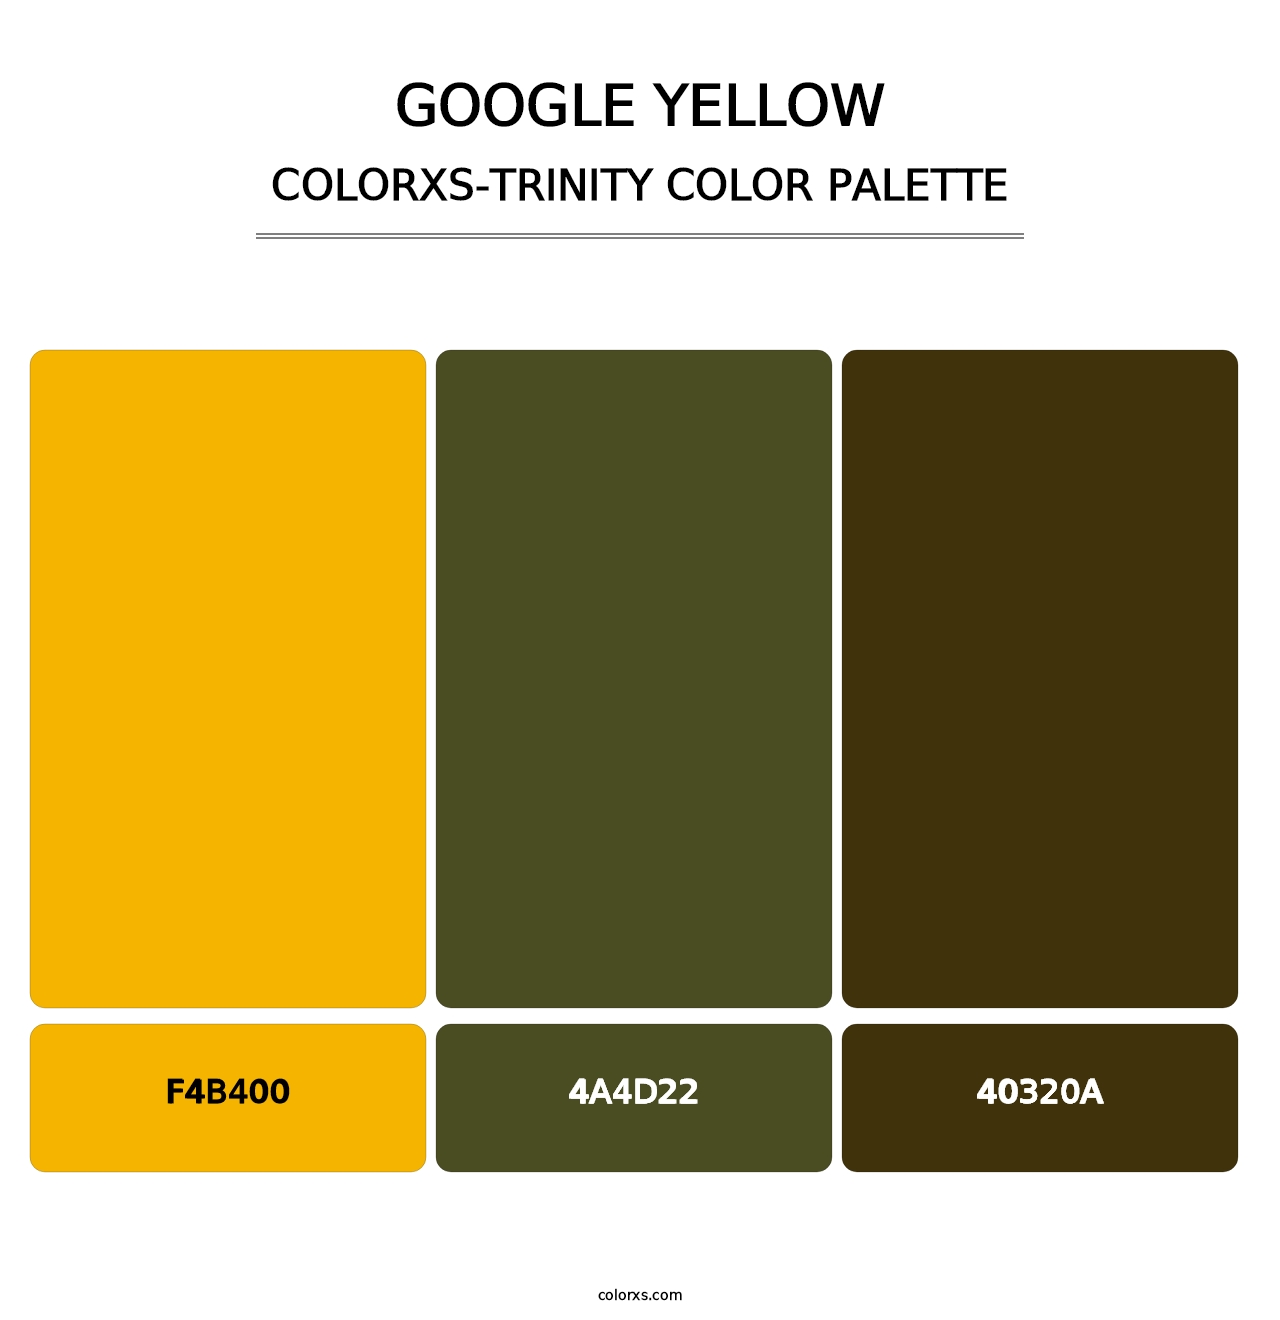 Google Yellow - Colorxs Trinity Palette